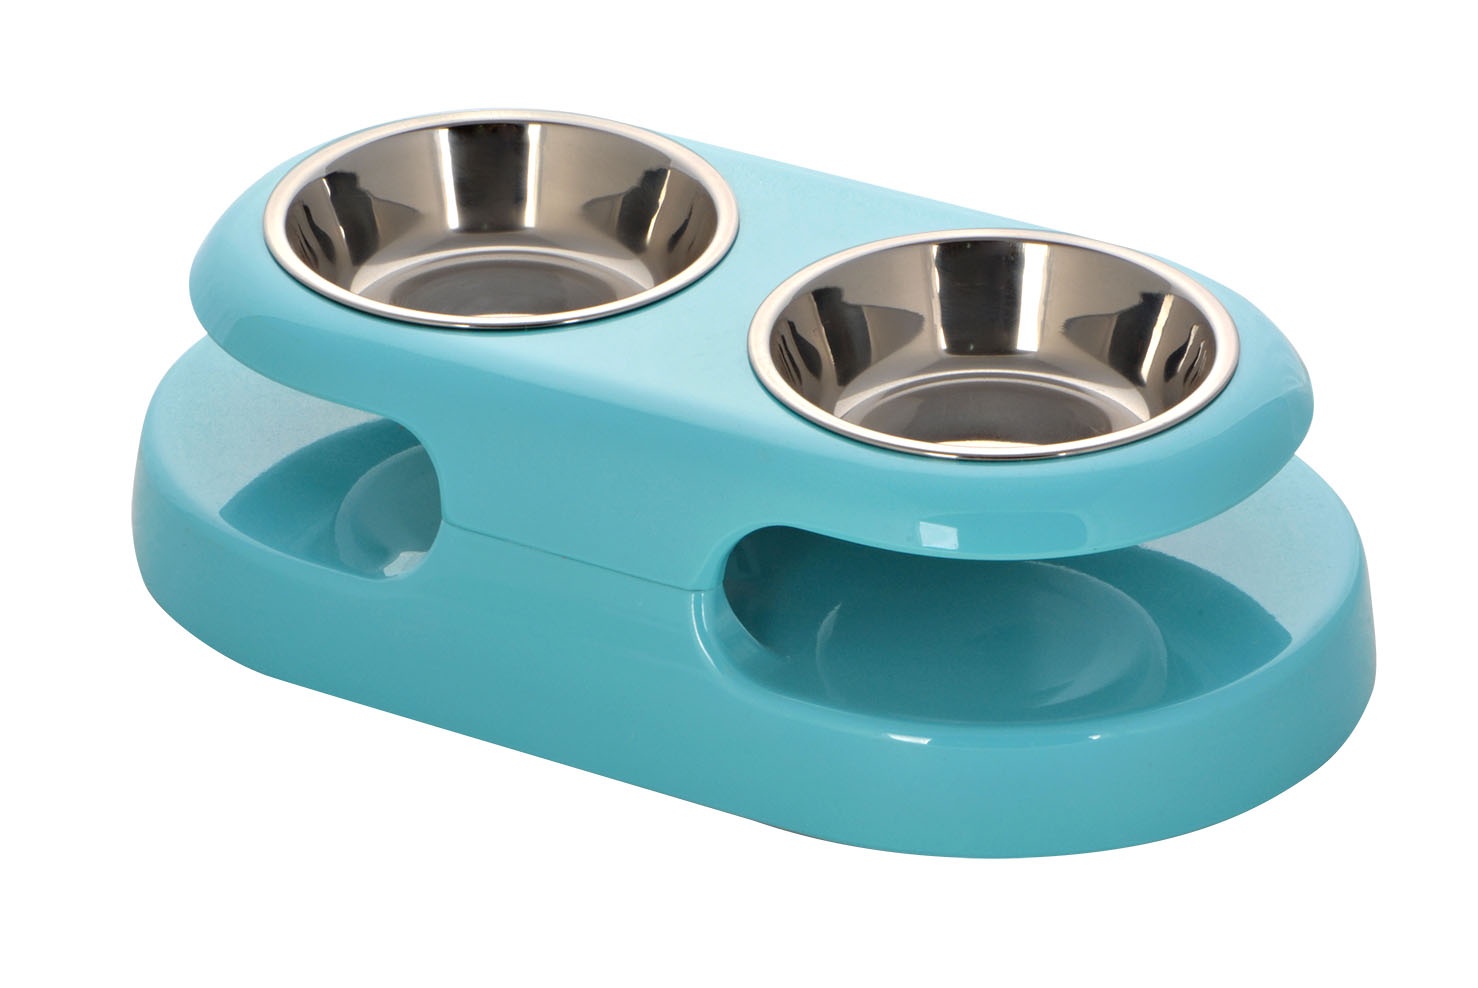 Shelf dog bowl set